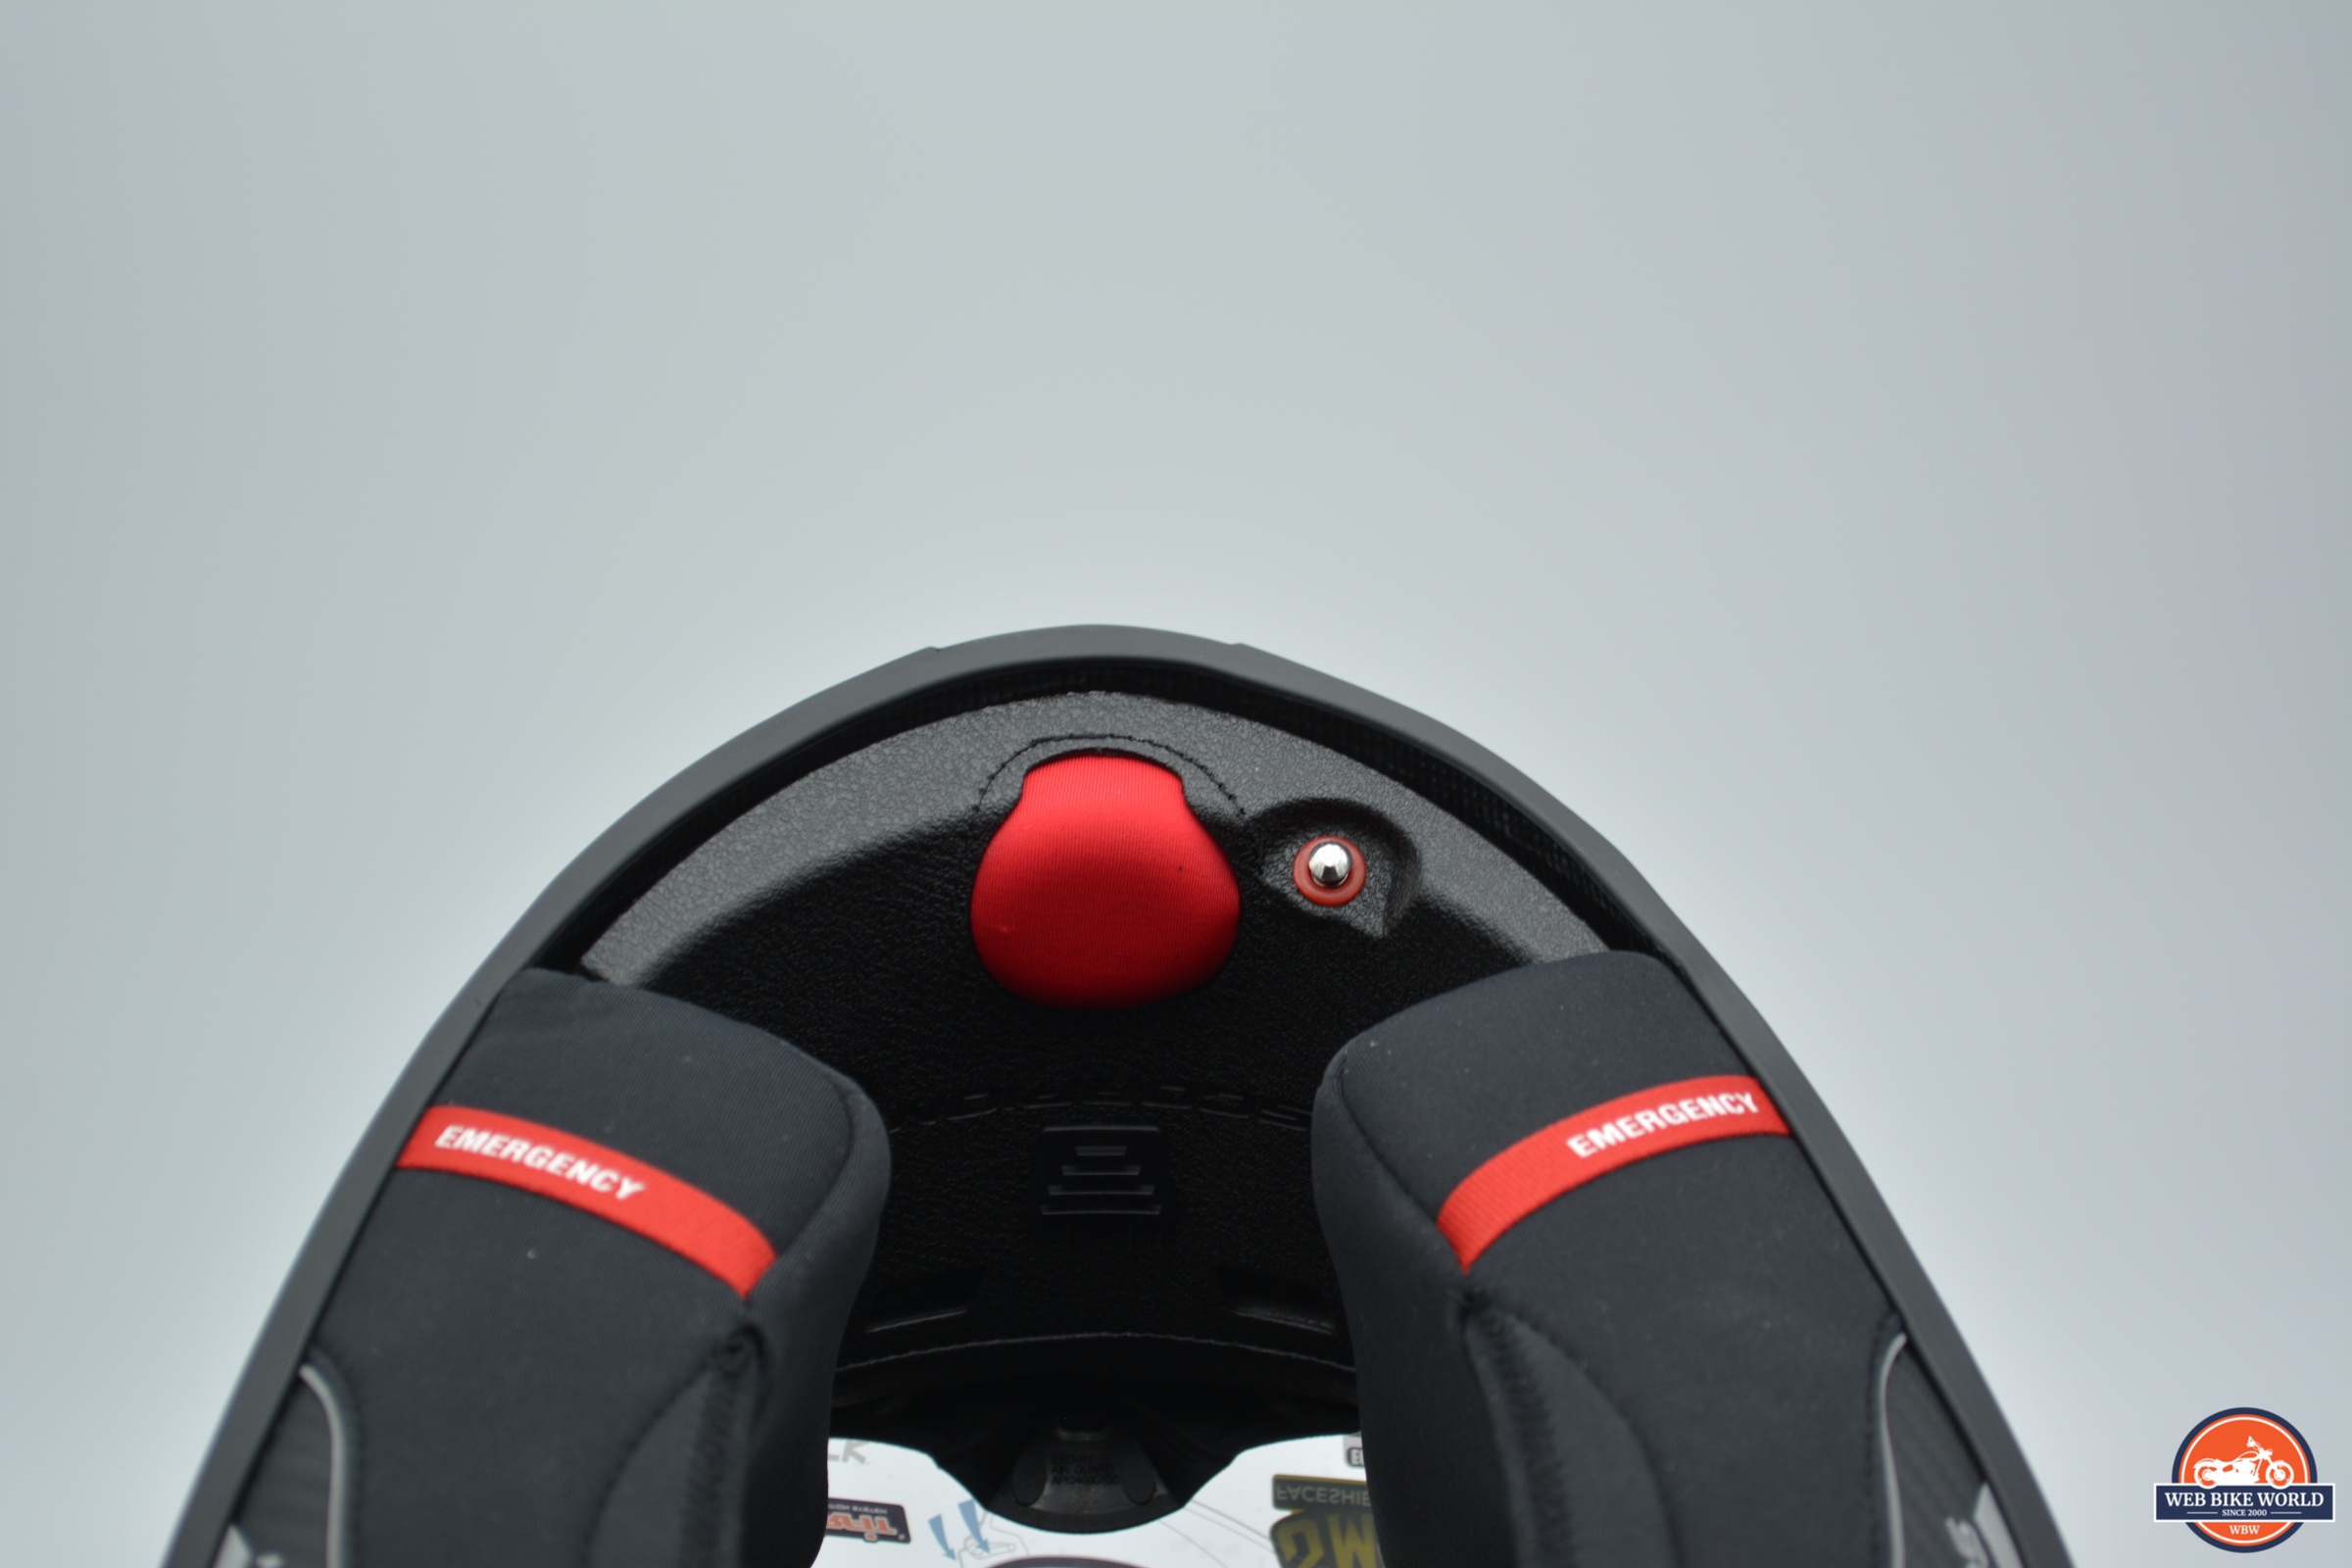 Pump and metal air valve release button for Scorpion EXO-R1 Air Carbon Helmet